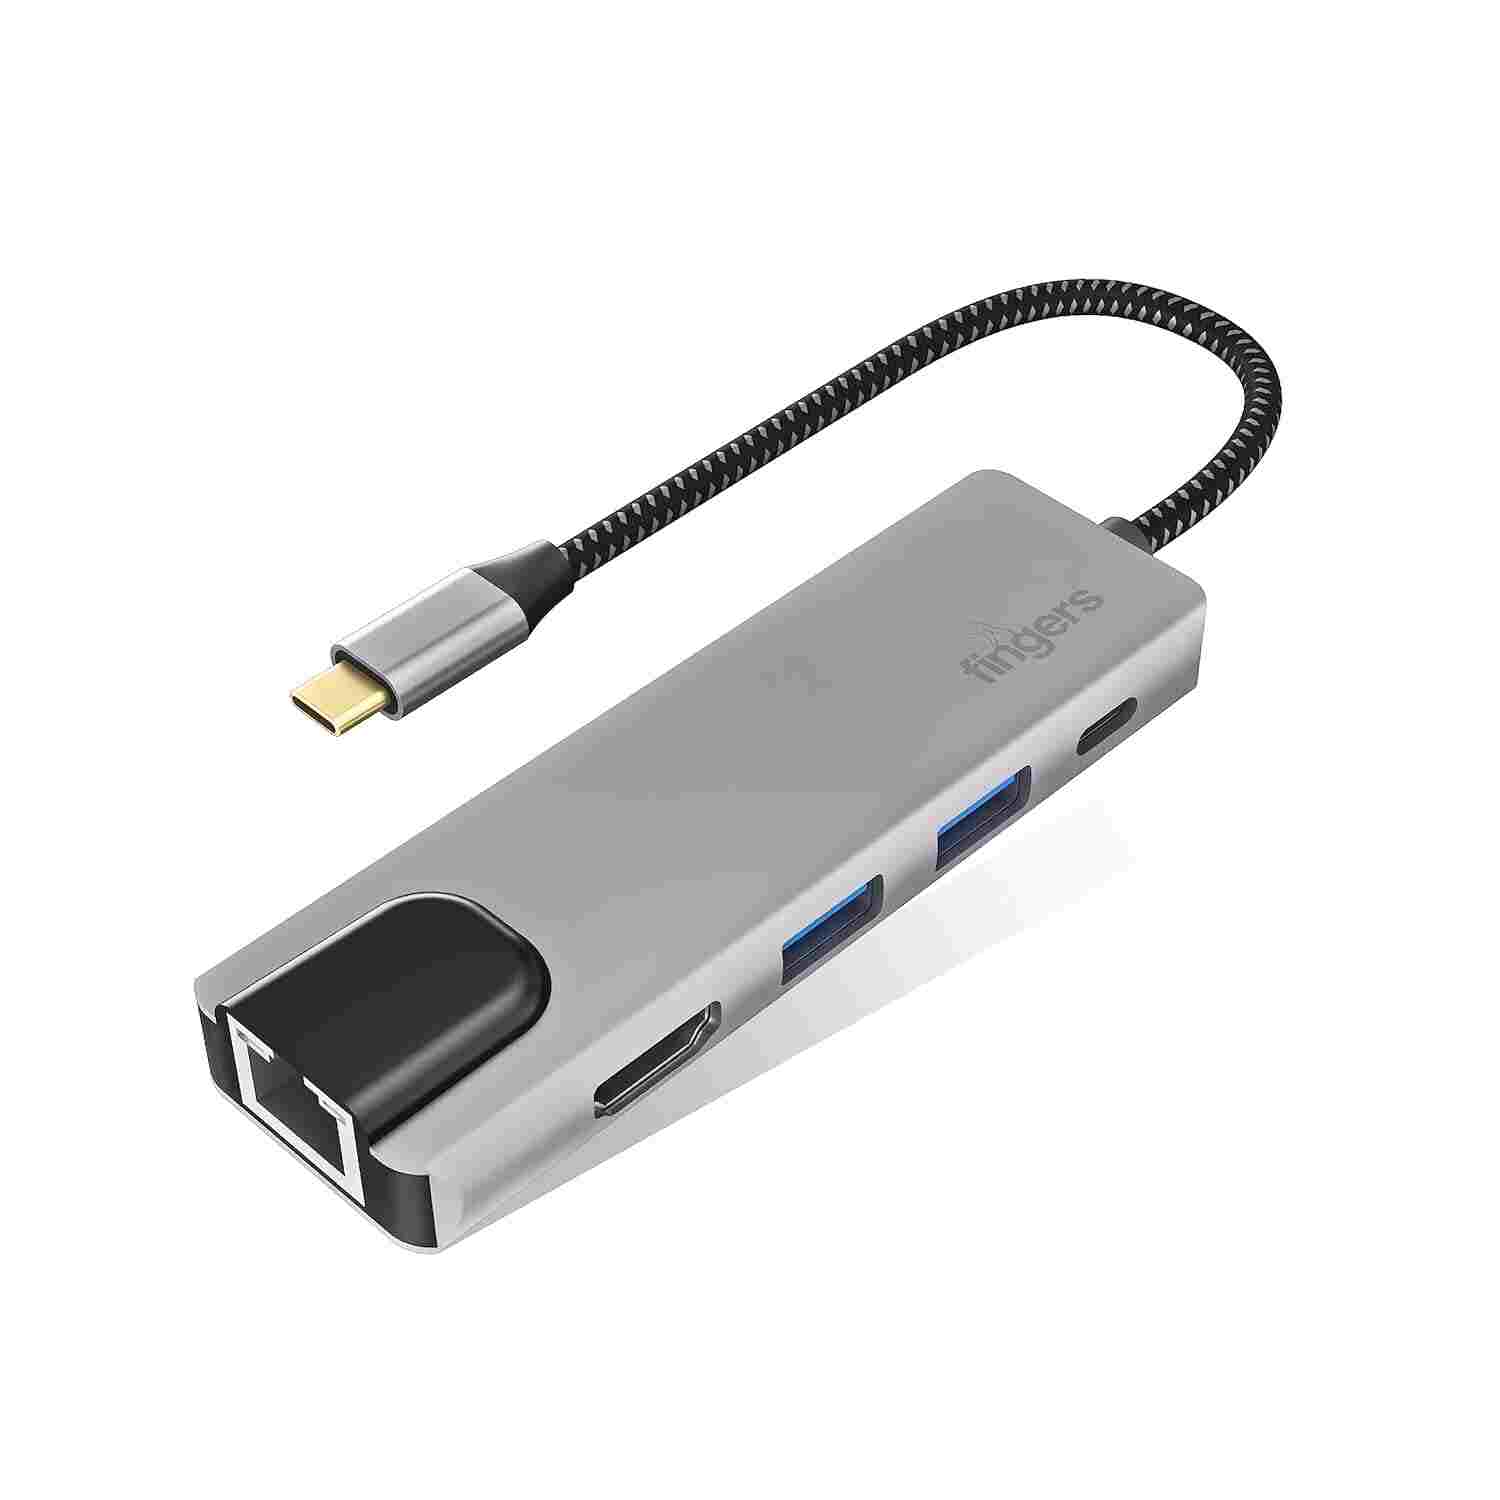 FINGERS UltimoDock 5-in-1 Type-C USB Hub (2 x USB 3.0, HDMI, Giga LAN, USB Type-C with PD Charging)